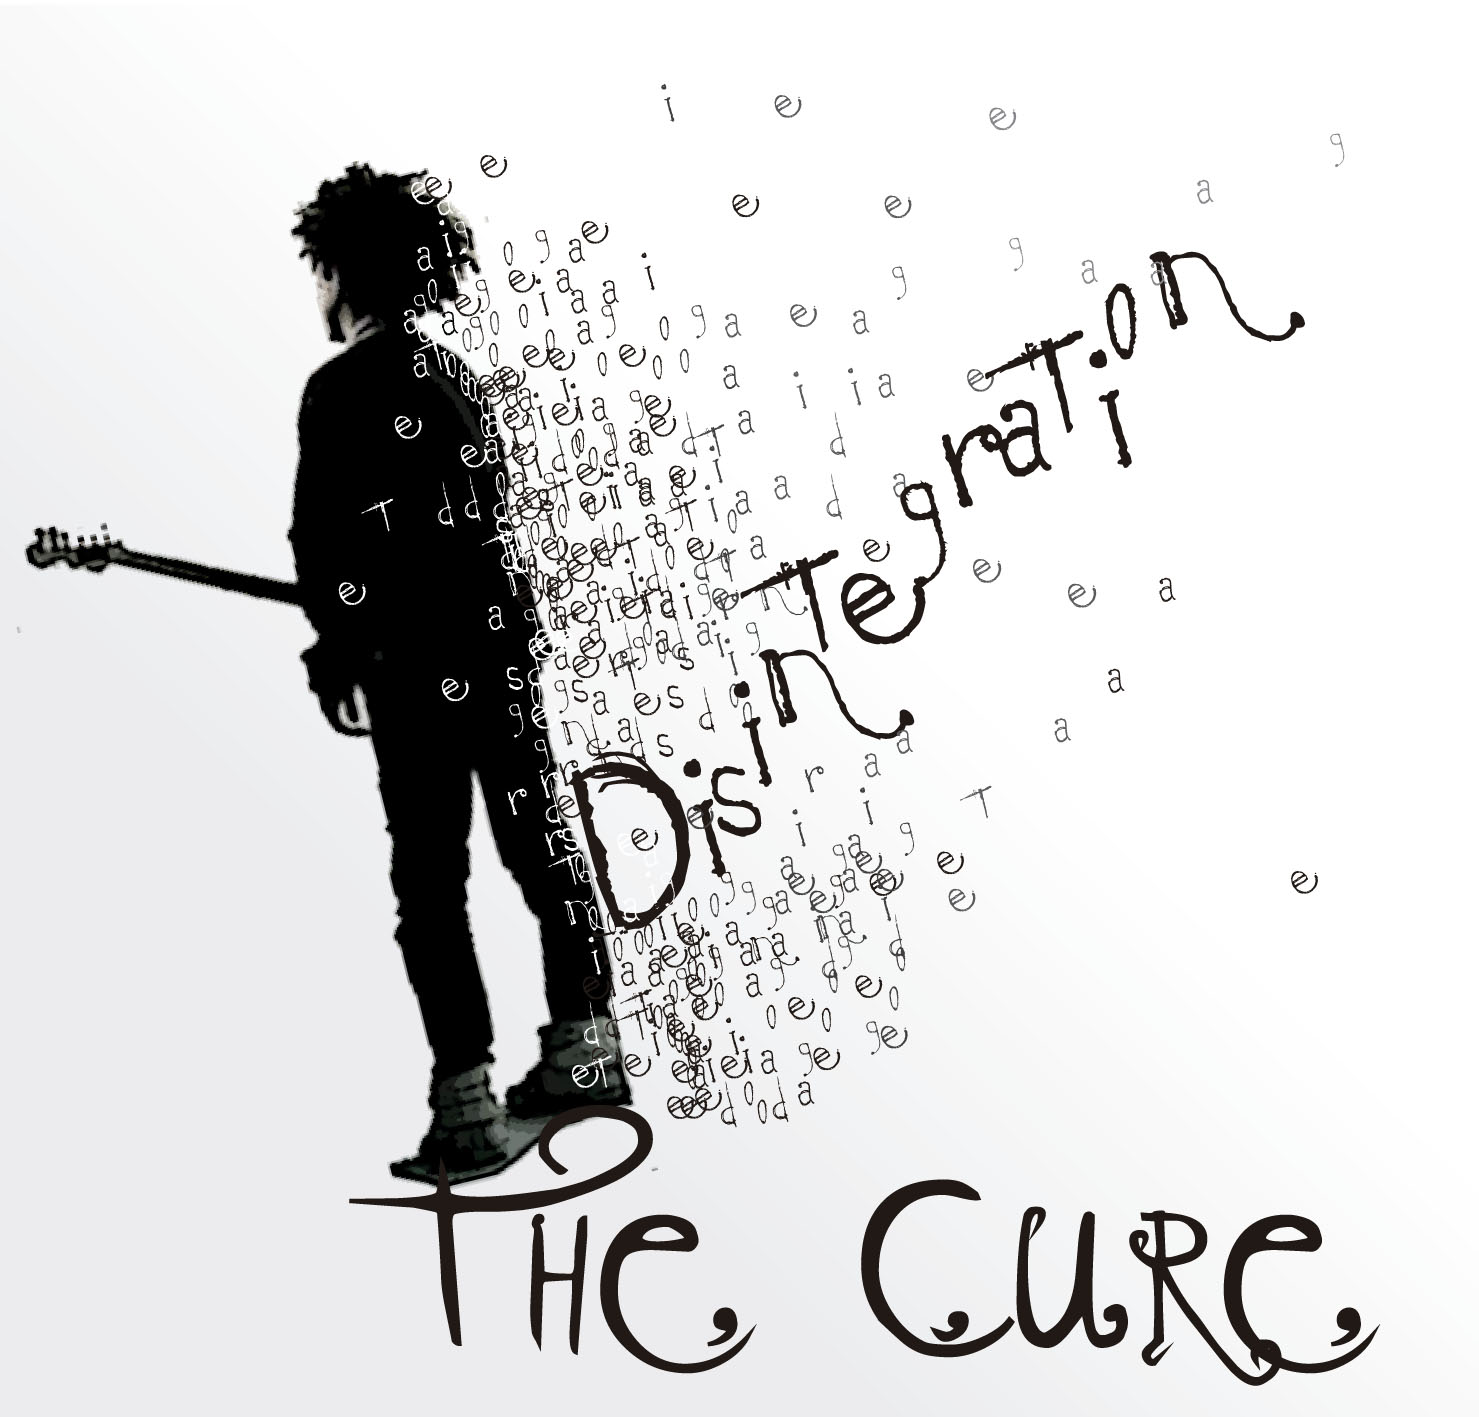 Caratula CD The Cure | Tinta negra